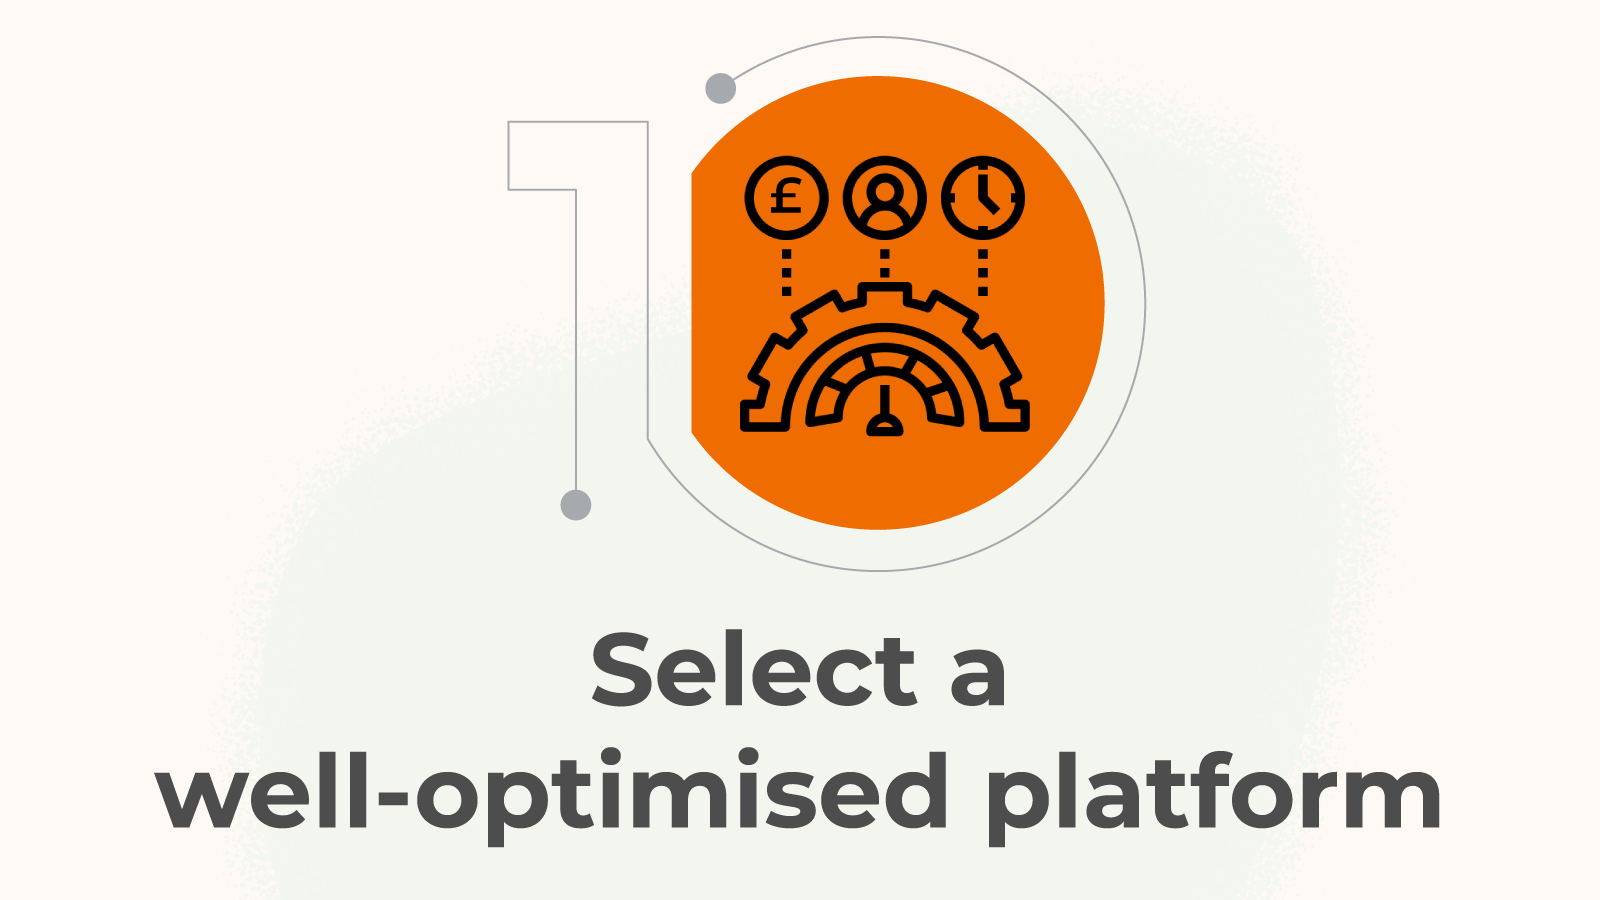 Select a well-optimised platform